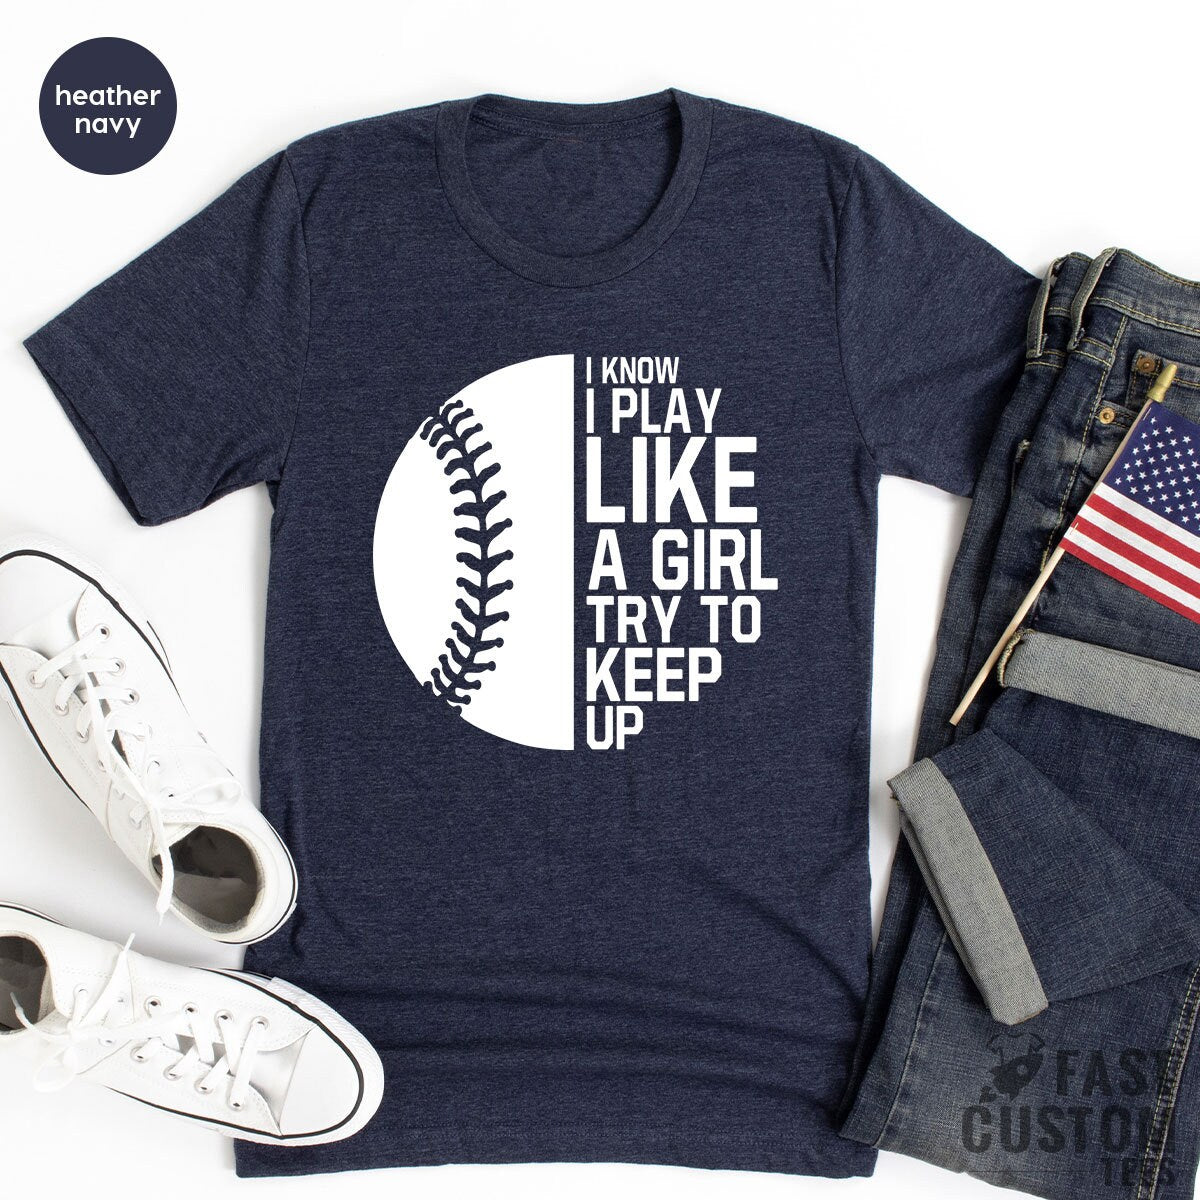 Funny Baseball Shirt, Funny Softball Shirt, Baseball Tshirt, Softball Shirt, Game Day Shirt, Baseball Fan Shirt, Play Like A Girl